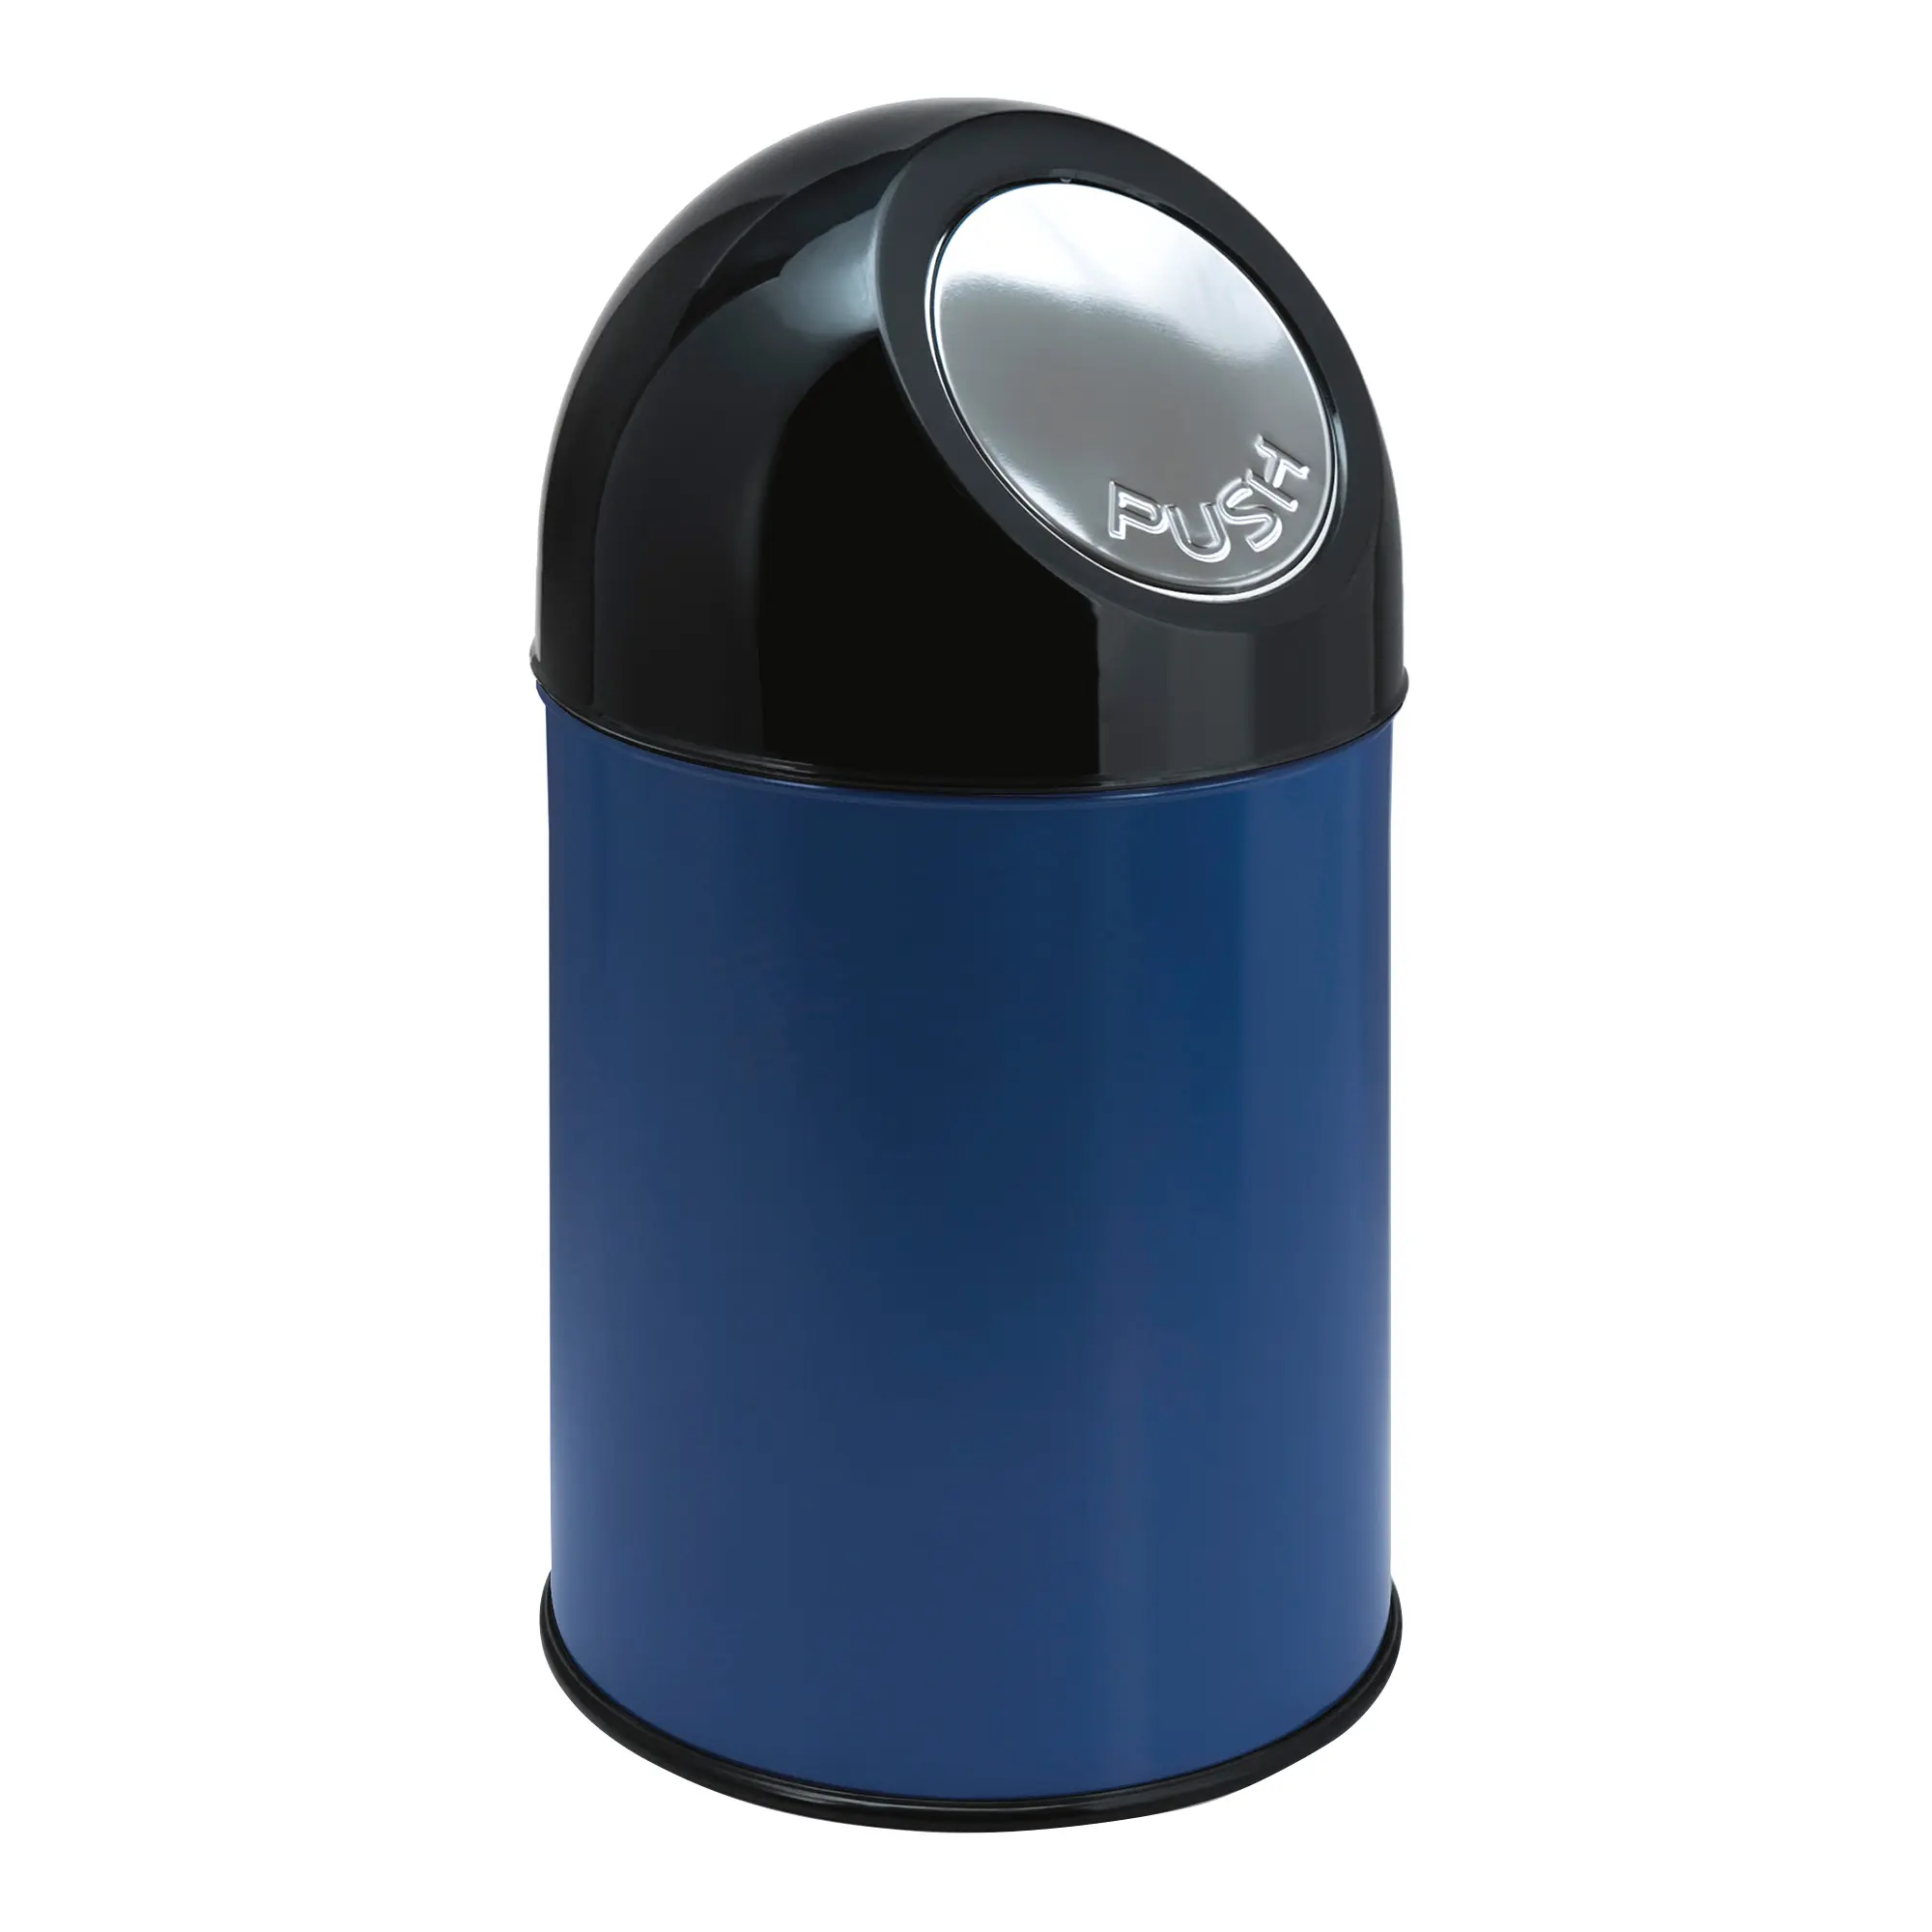 V-Part Abfallbehälter Edelstahl-Pushklappe Inneneimer 30 Liter blau/schwarz 31023431_1